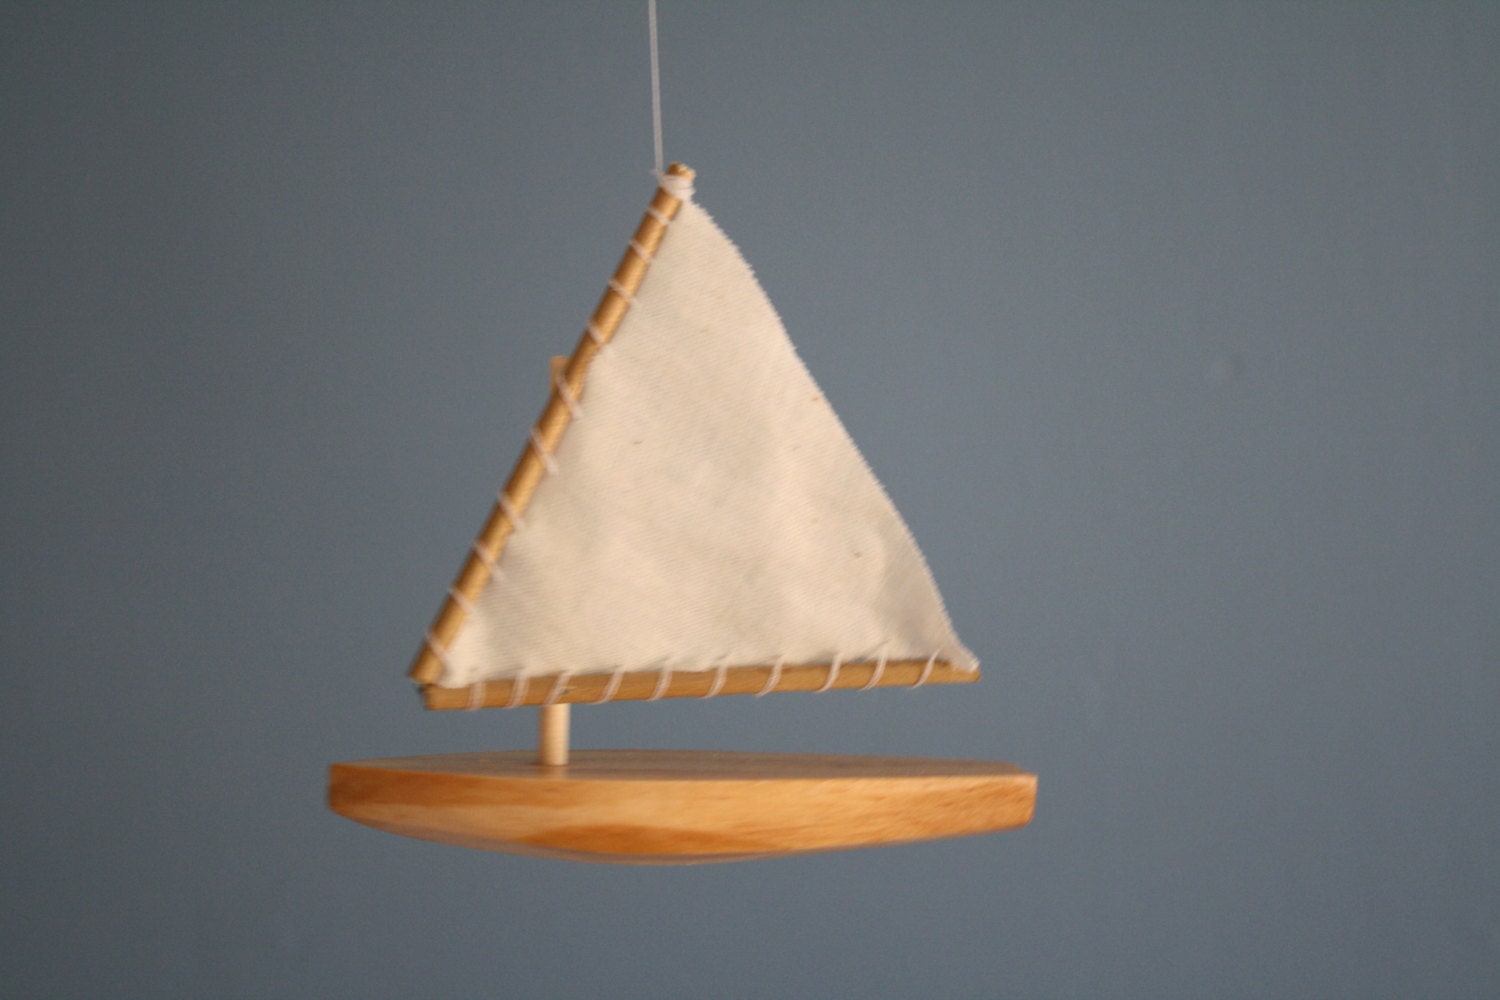 Handmade Wooden Sunfish Sailboat Mobile by littlesailboats 